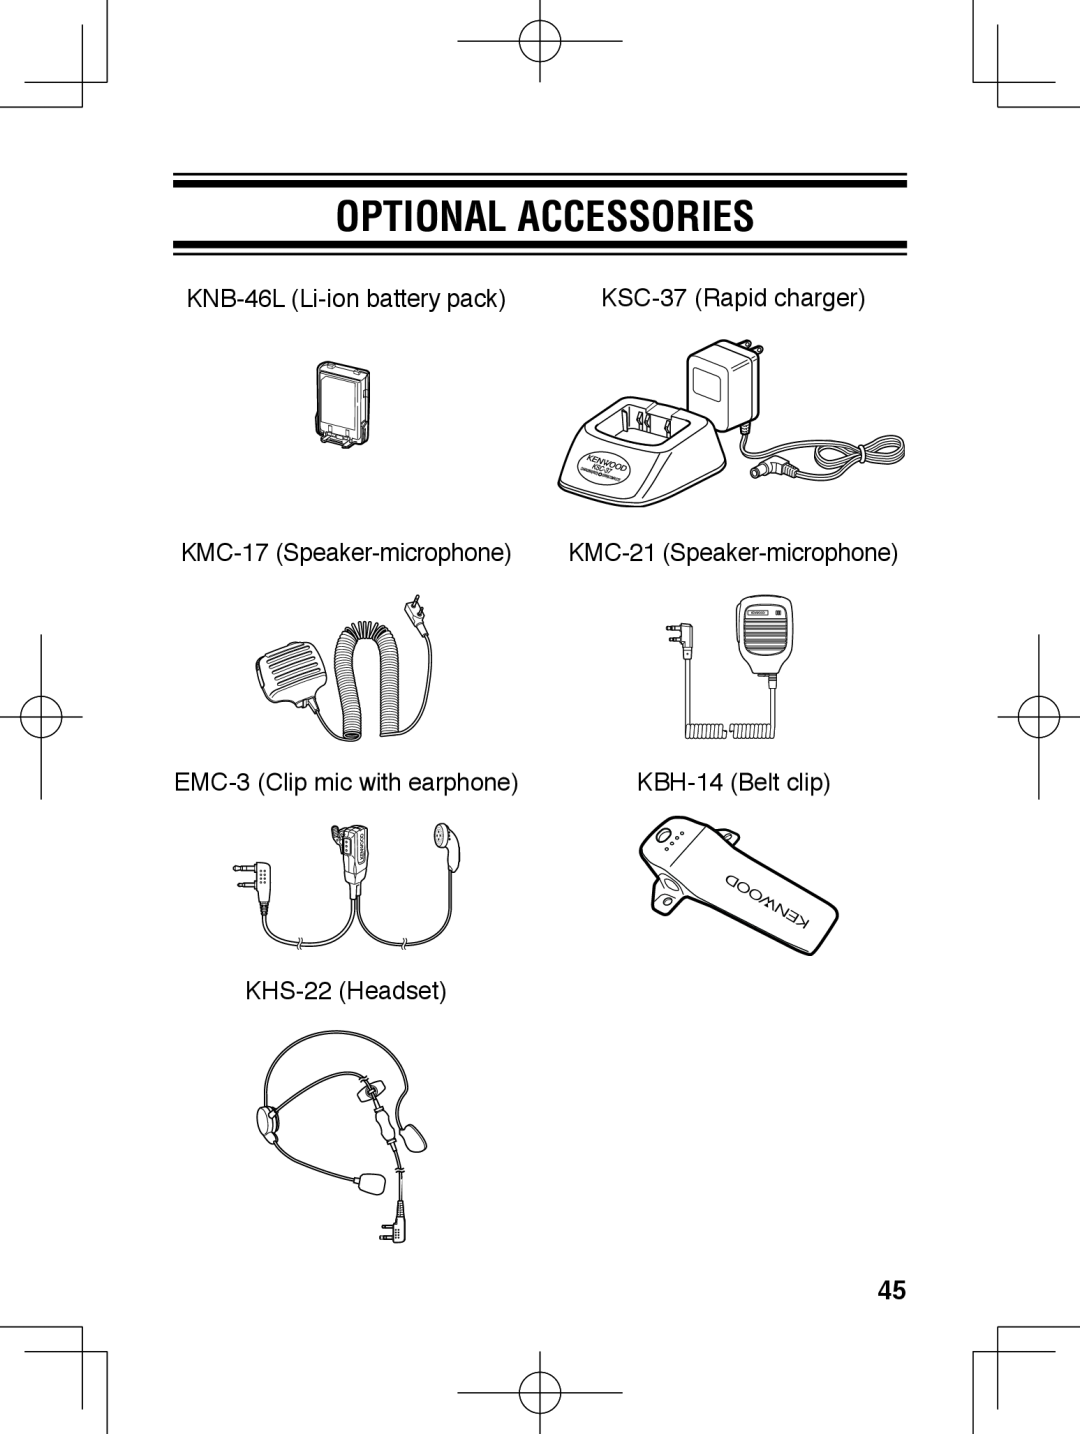 Kenwood TK-3230 Optional Accessories, KNB-46L Li-ionbattery pack, KMC-17 Speaker-microphone, KBH-14Belt clip 